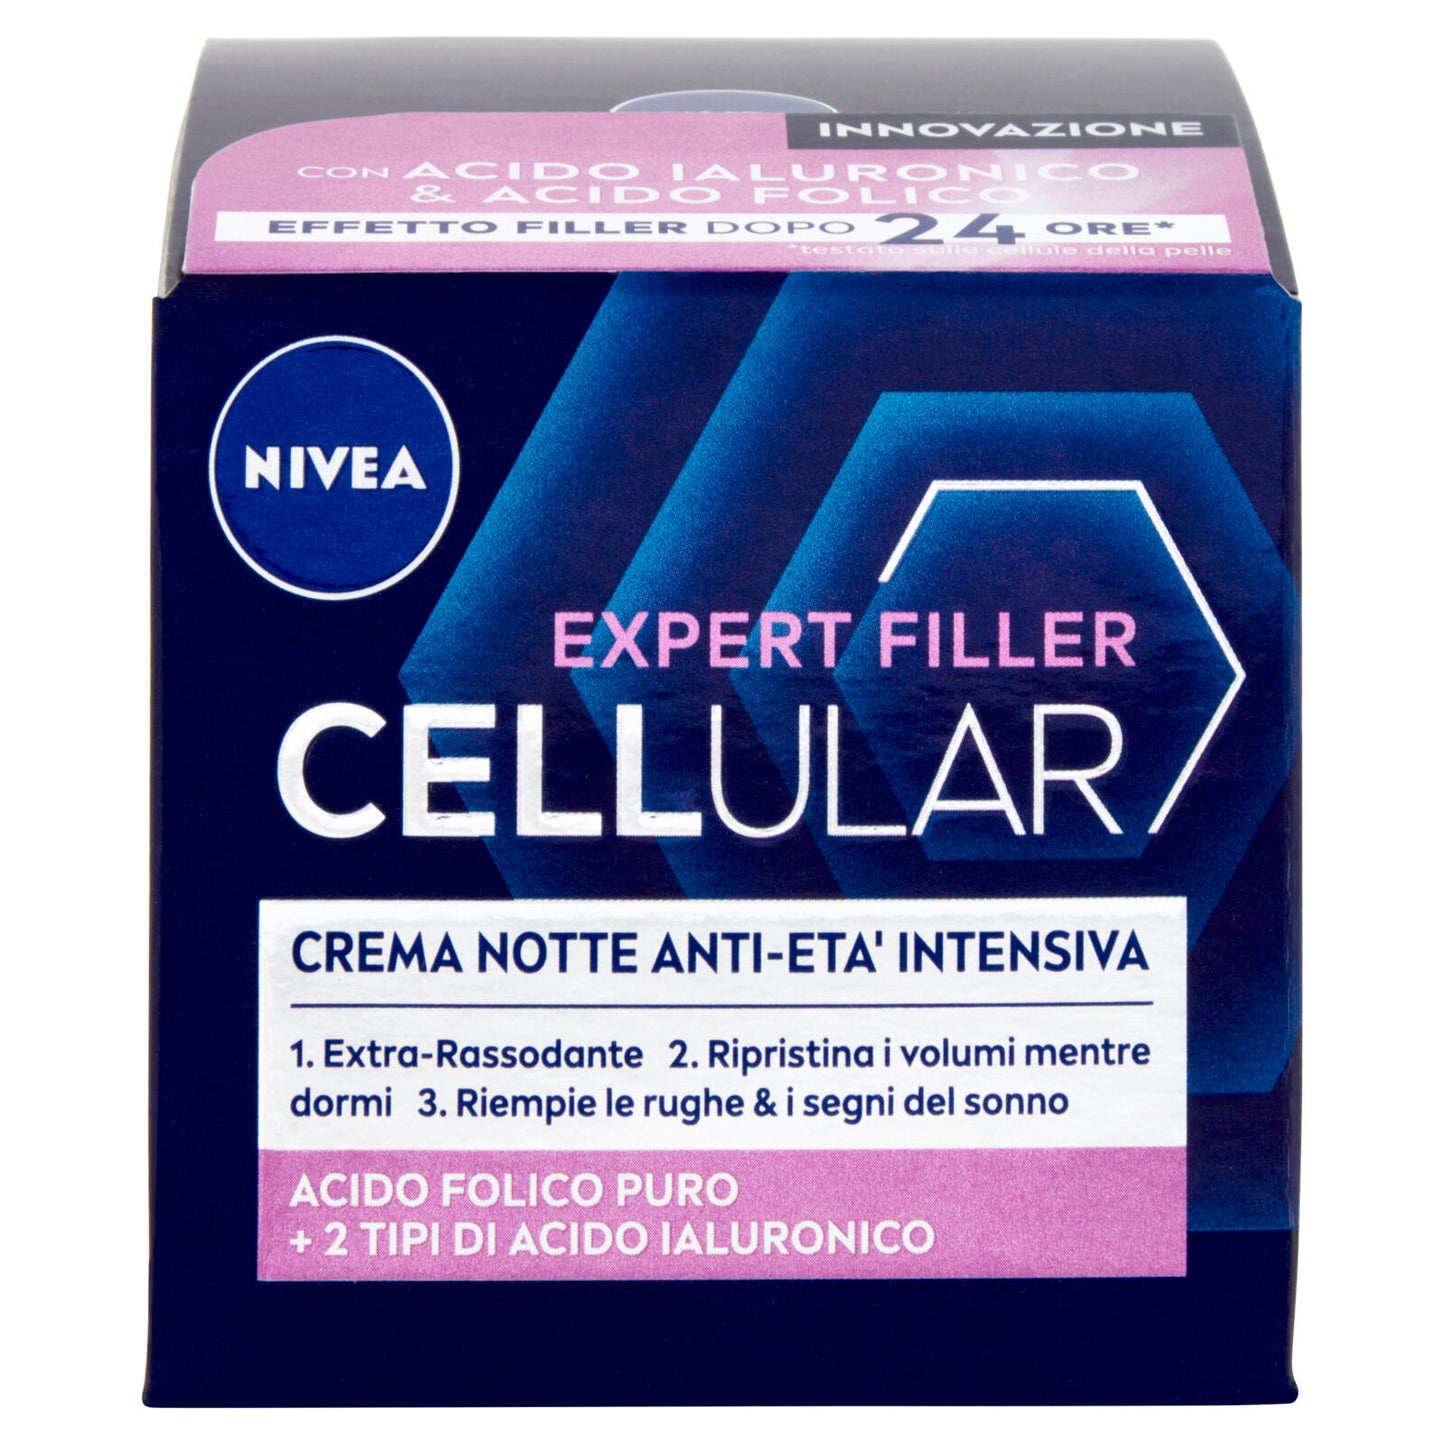 Nivea Cellular Expert Filler Crema Notte Anti-Età Intensiva 50 ml